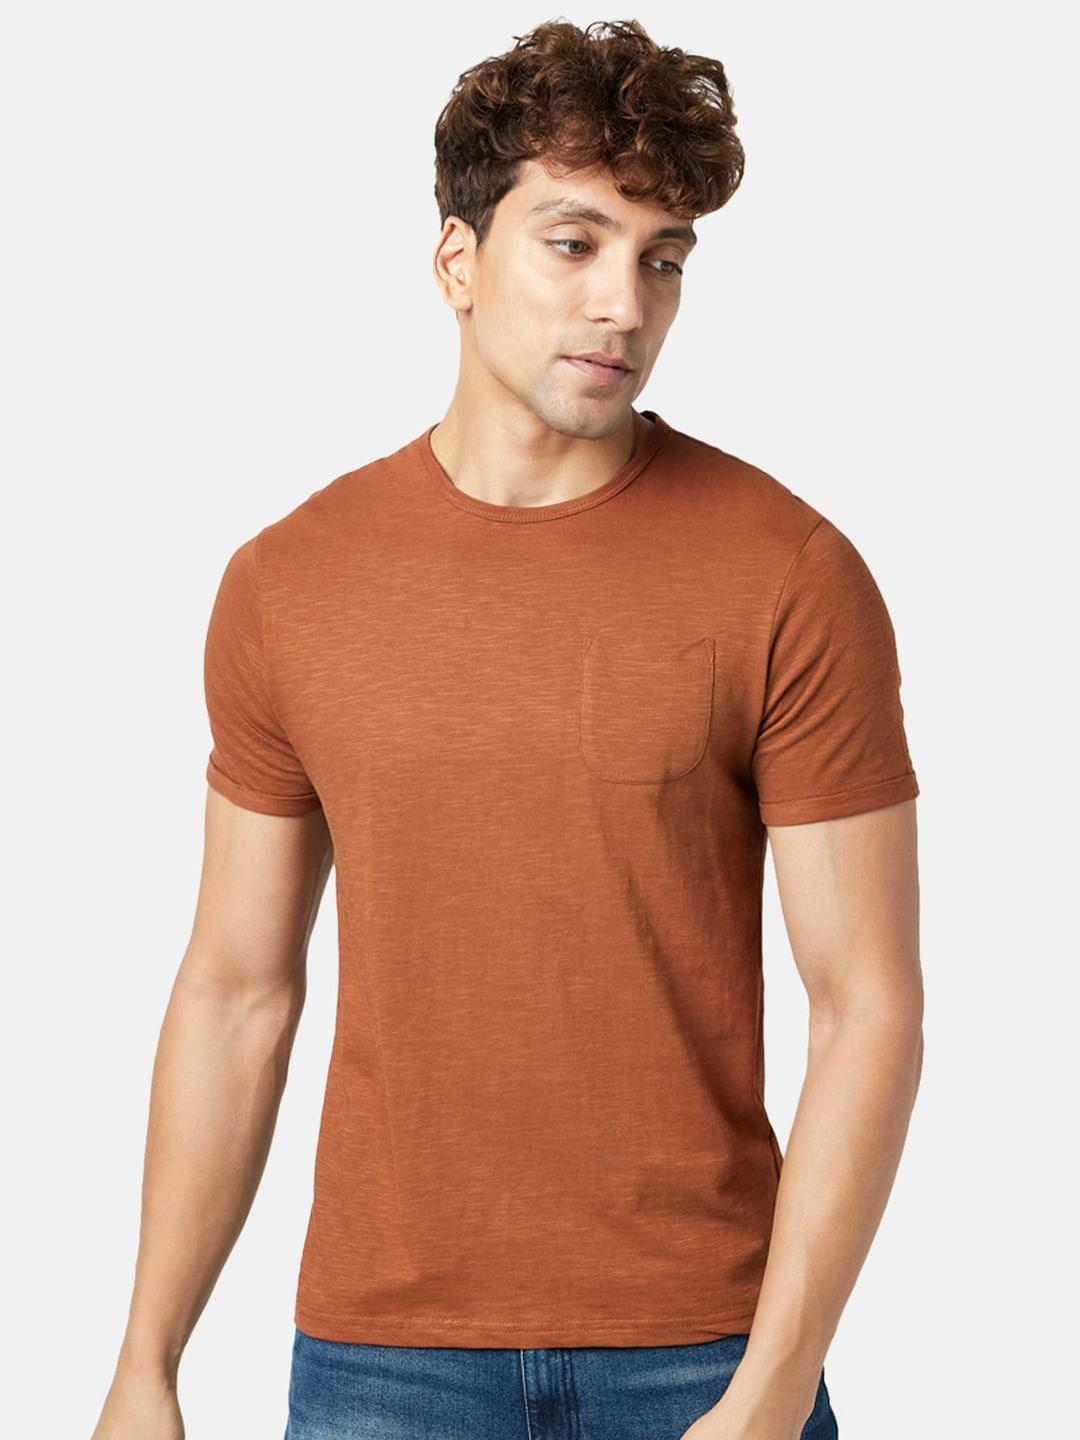 people-men-slim-fit-round-neck-cotton-t-shirt